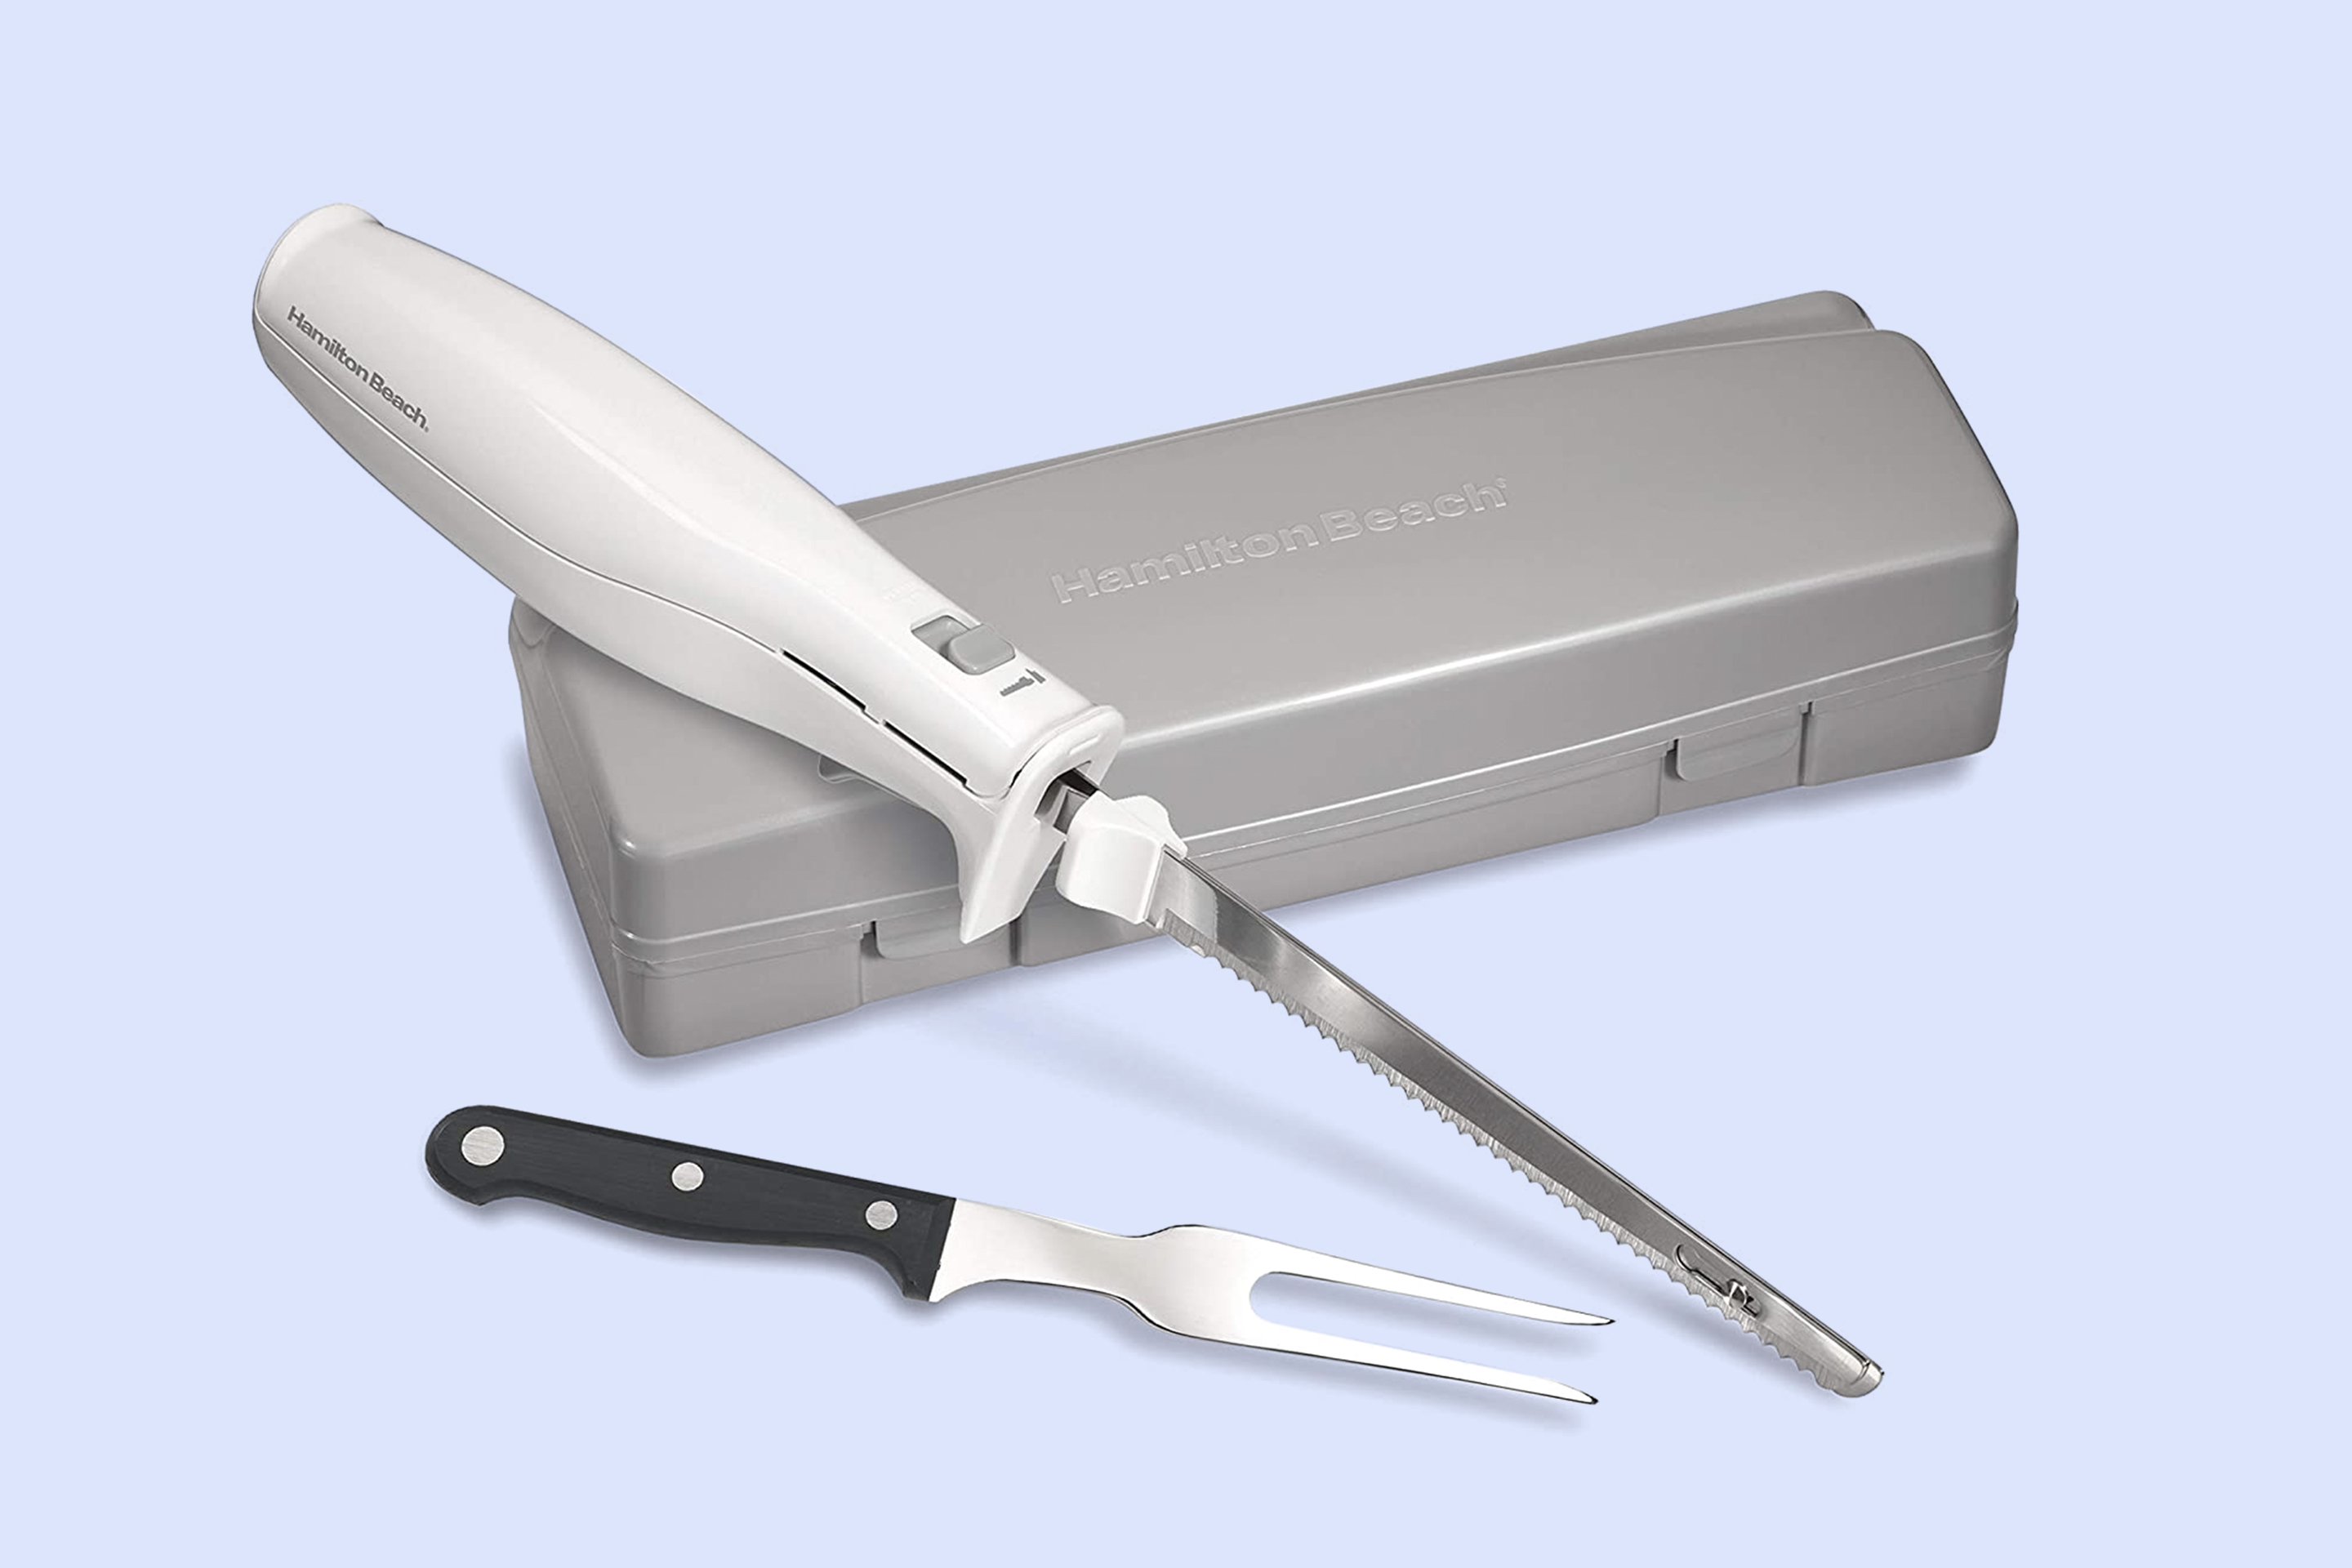 Black + Decker Comfortgrip 9 In. Electric Knife, Cutlery, Household